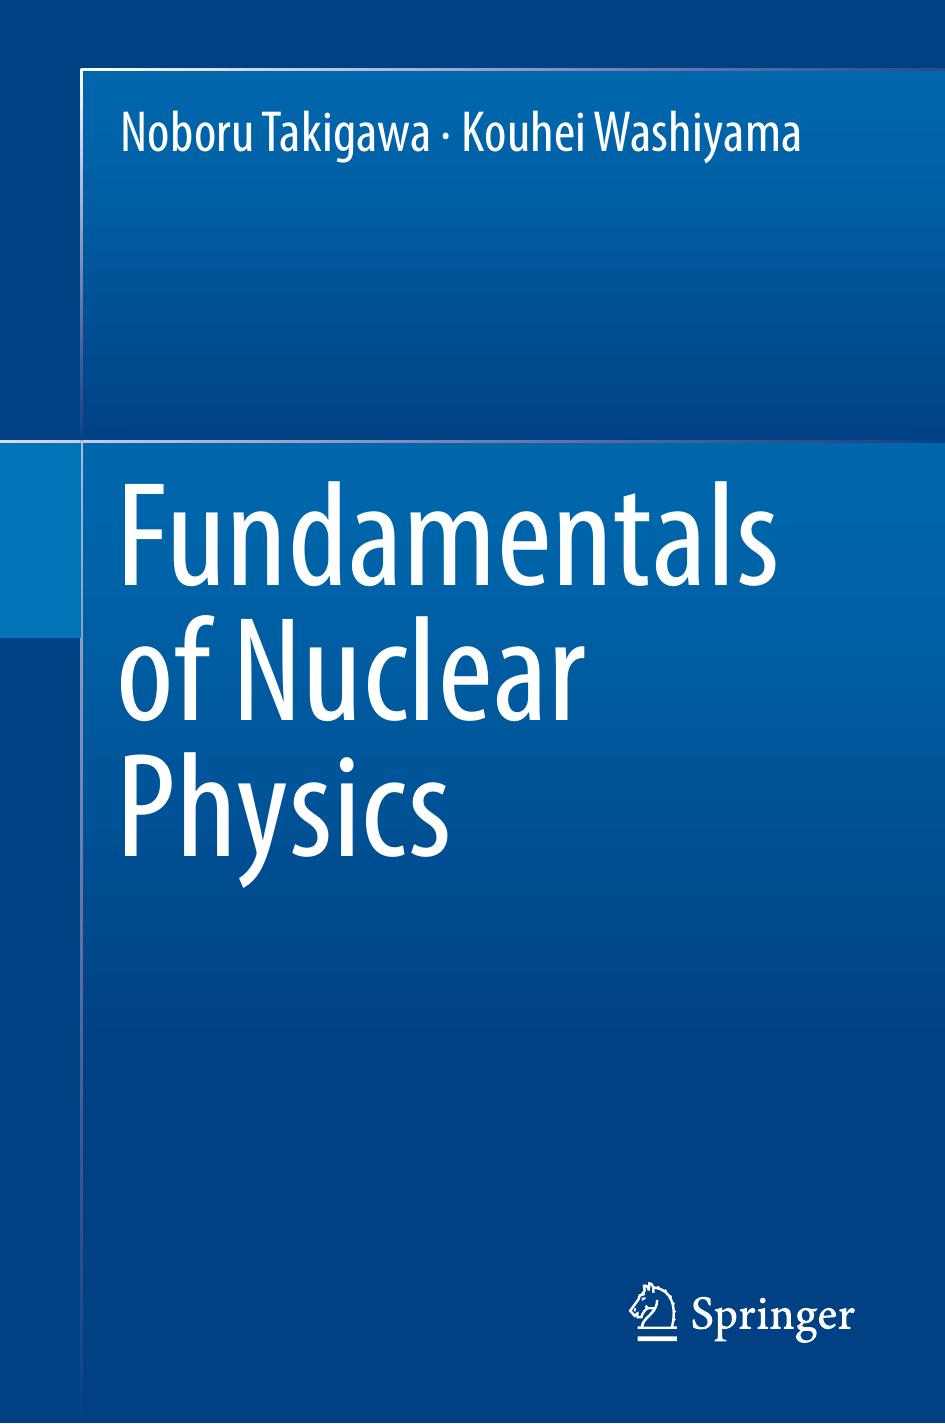 Fundamentals of nuclear physics  Fundamentals of nuclear physics (1) 2017